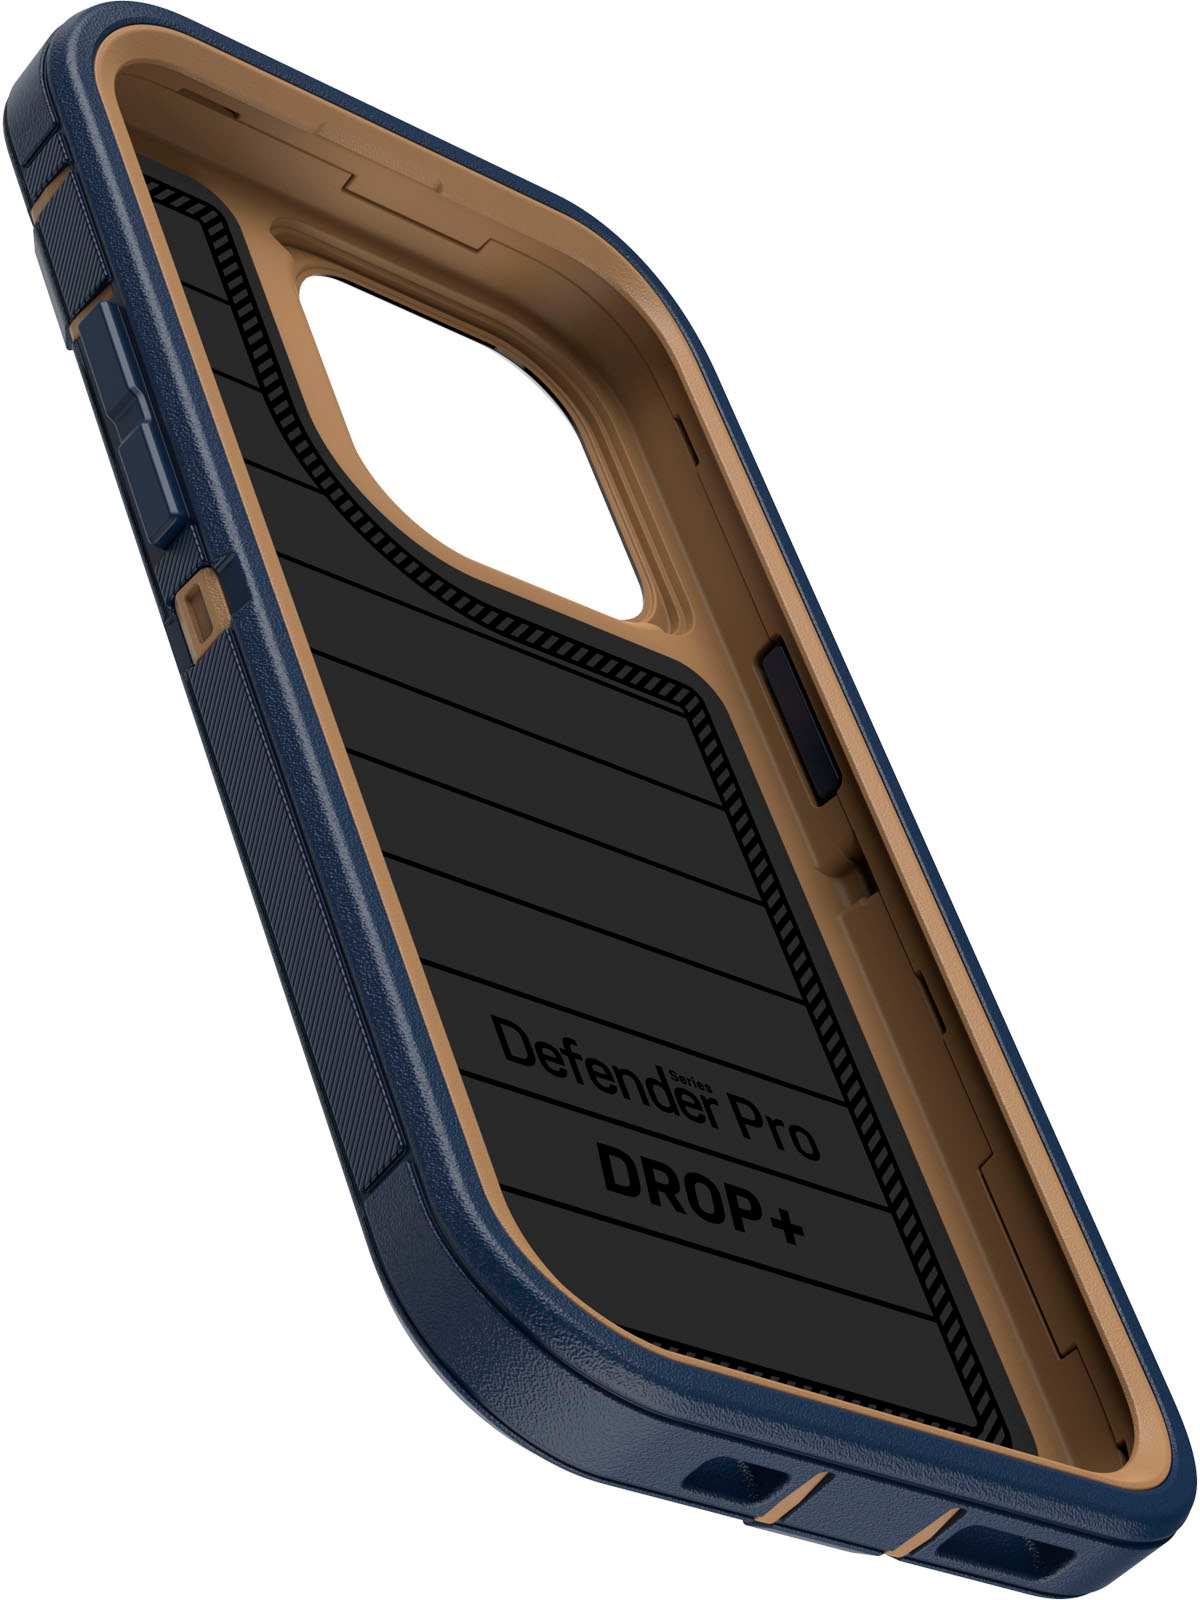 Blue Rugged iPhone SE (3rd gen) Case | OtterBox Defender